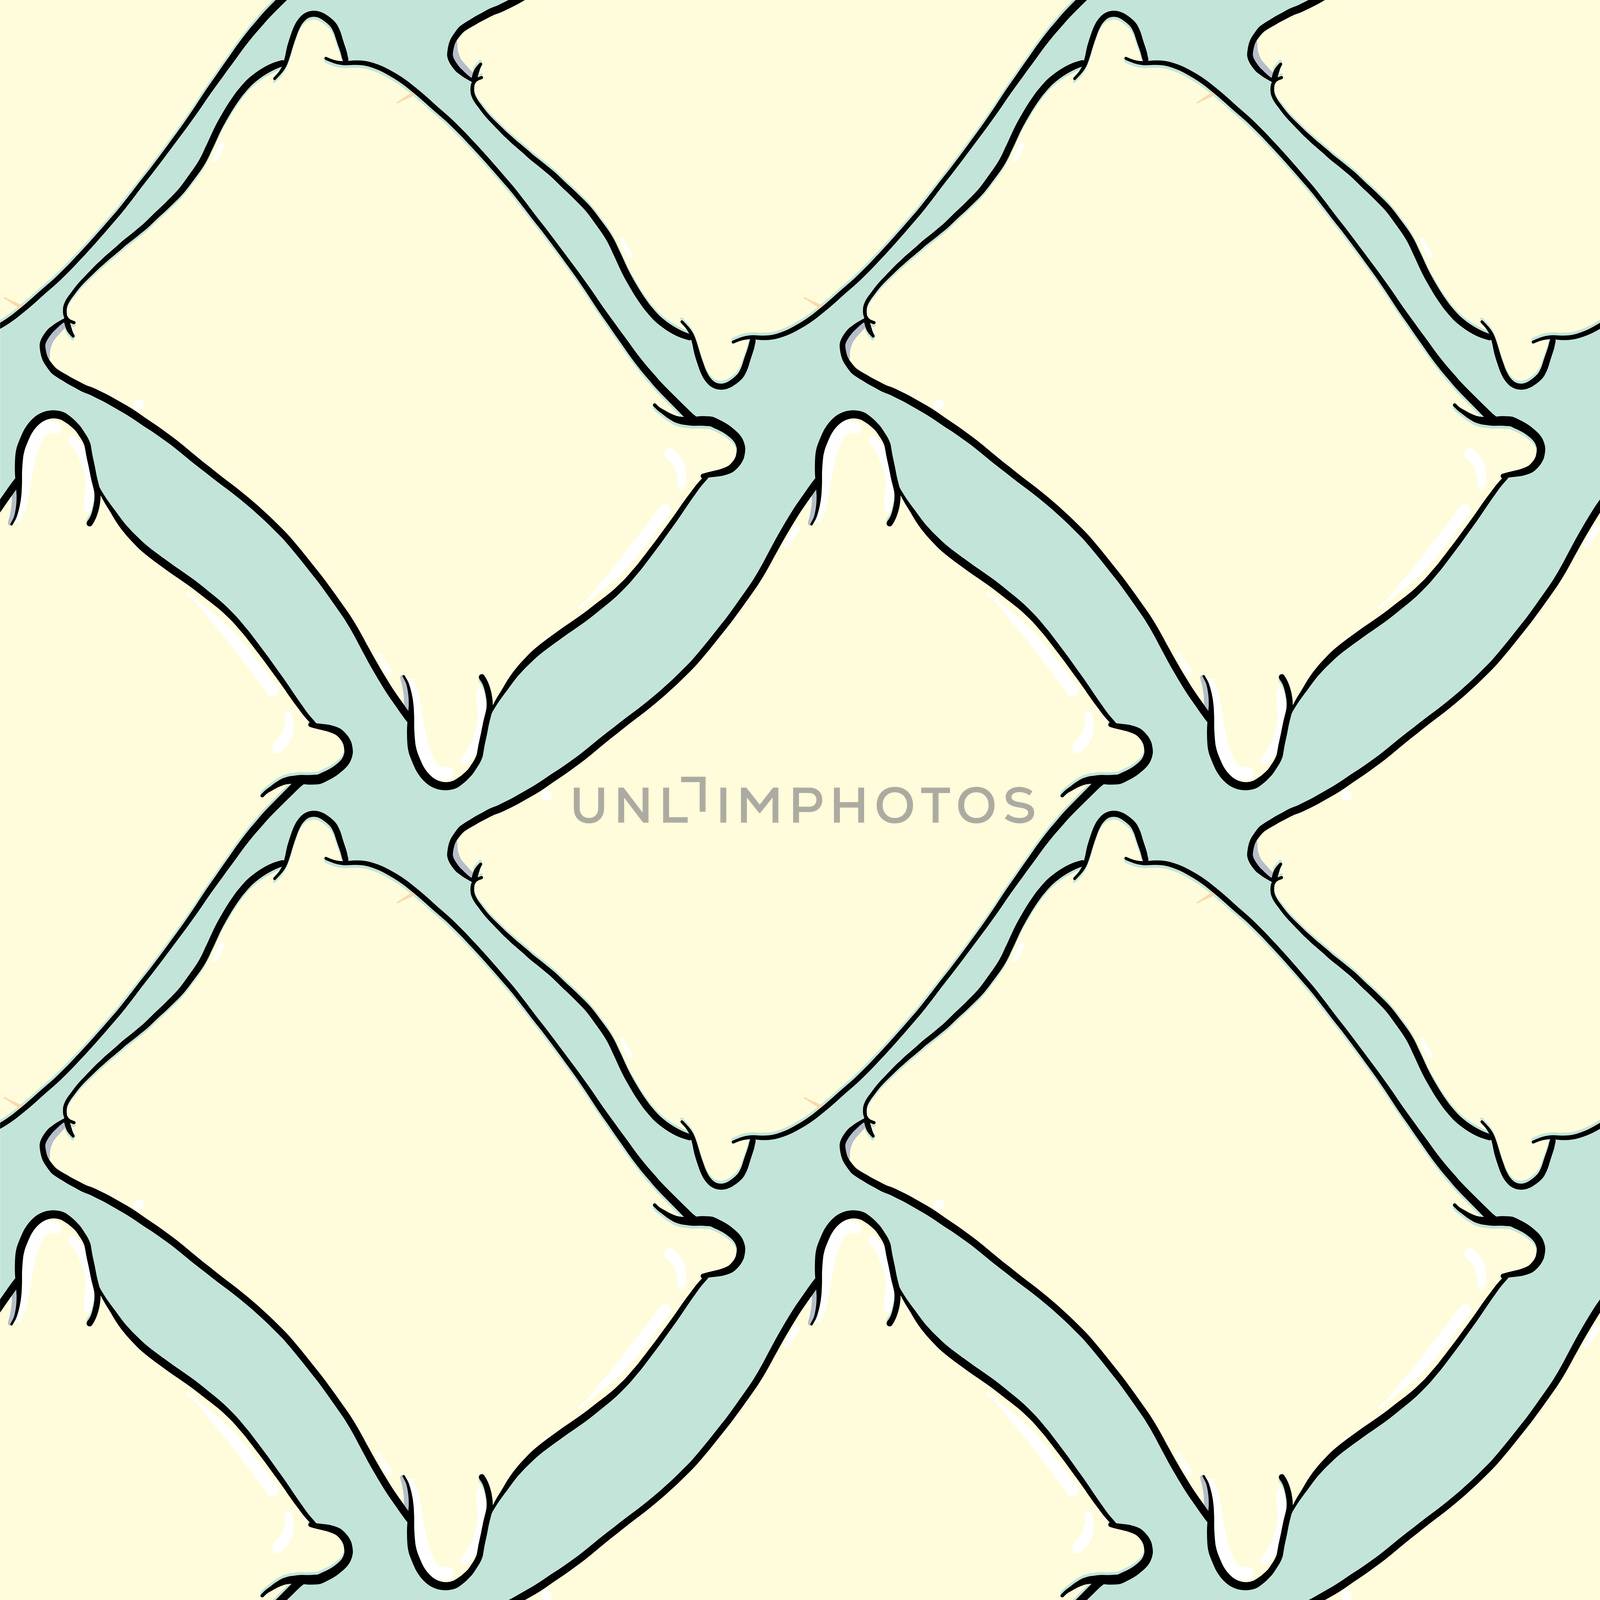 Pillows pattern , illustration, vector on white background by Morphart